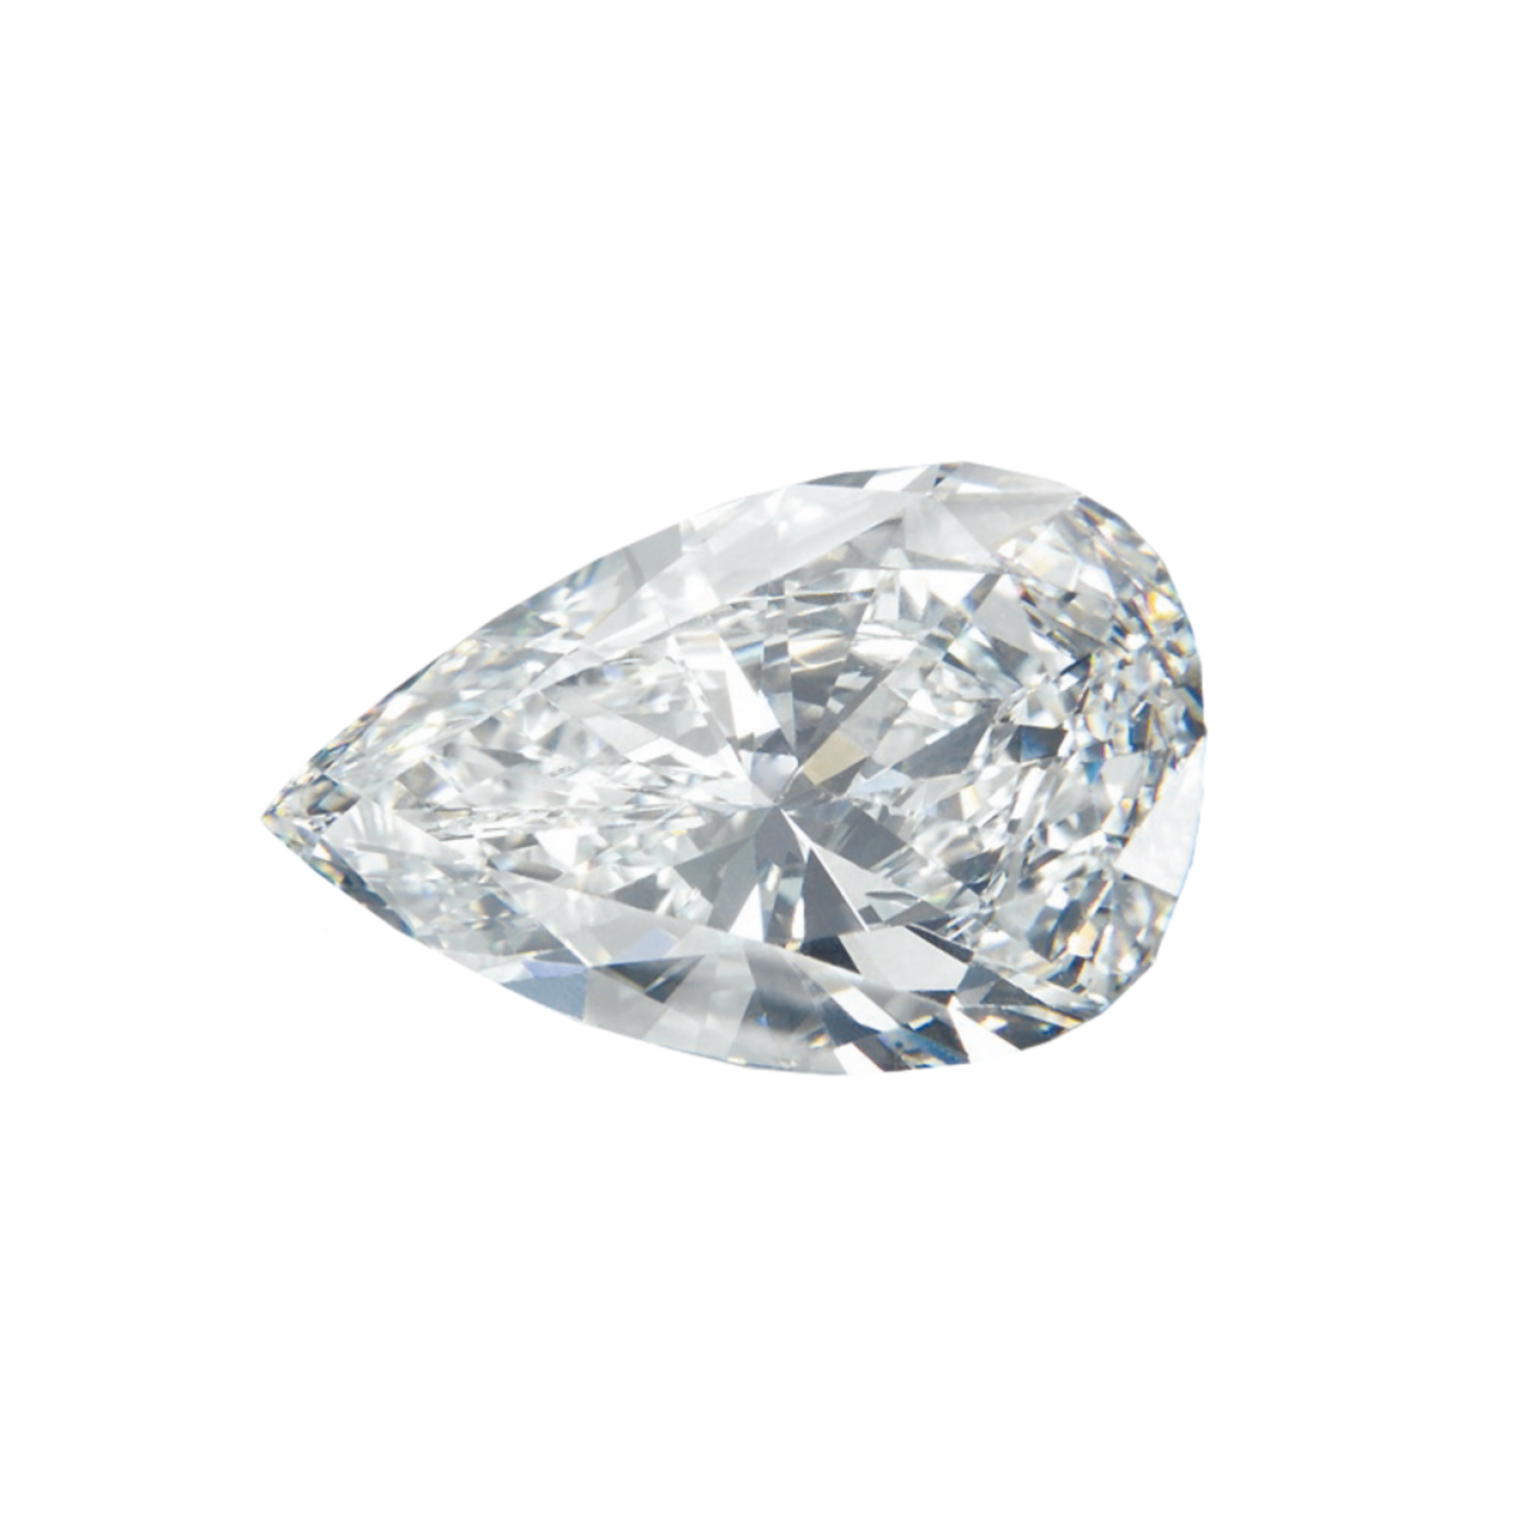 GASSAN Diamonds Pear Shape cut diamond